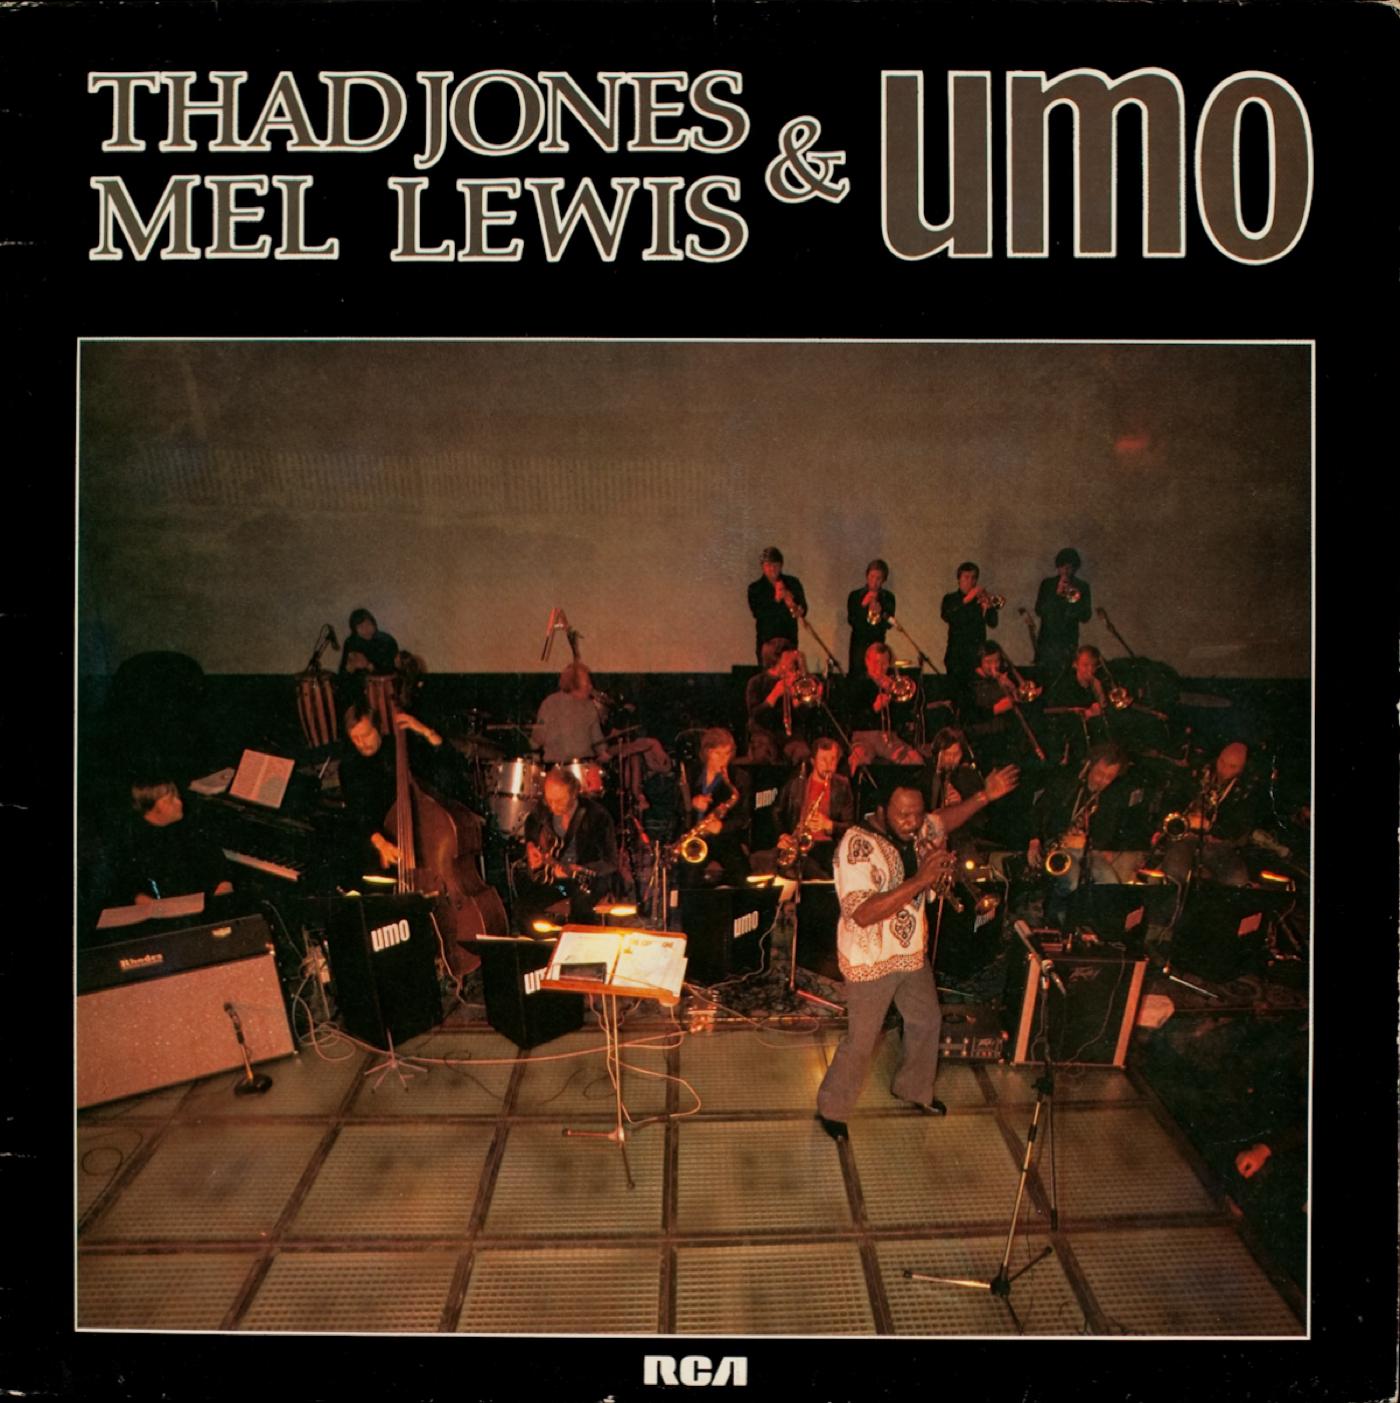 Thad Jones, Mel Lewis & UMO